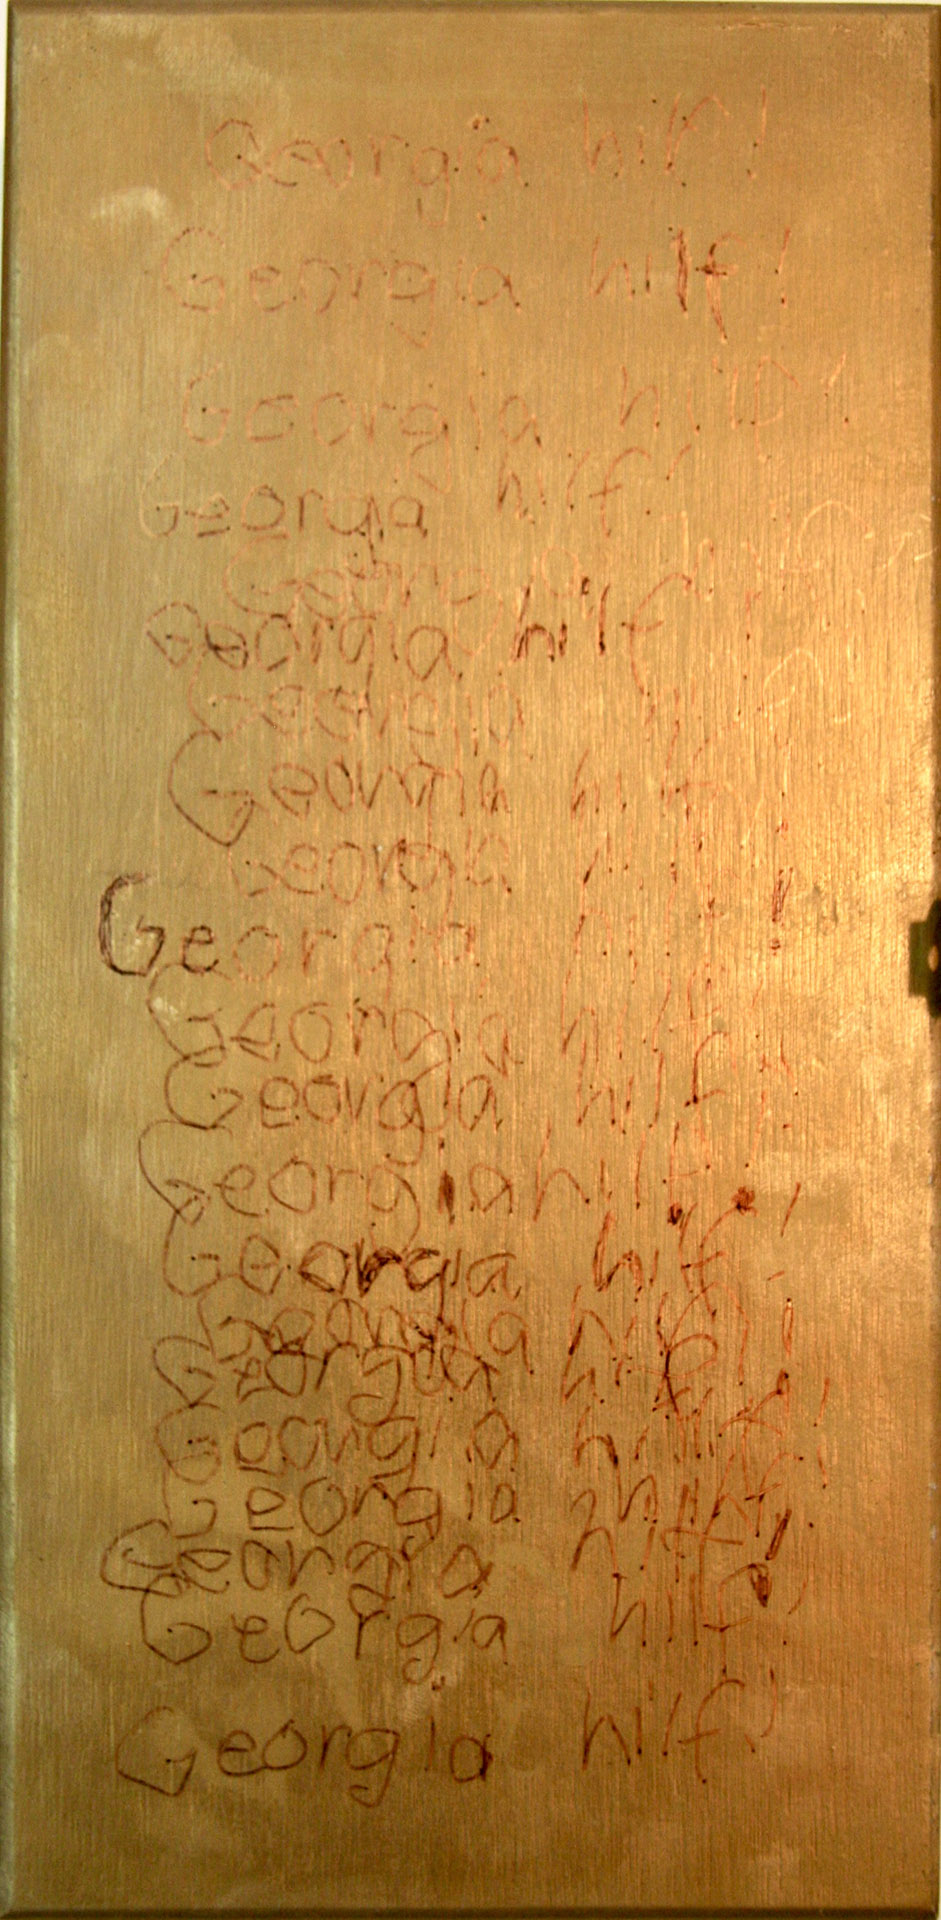 Georgia hilf, Sperrholz-Kasten geschlossen, 1999, Buntstift, Tusche, Fotos, Objekte, 12,5x25x6 cm